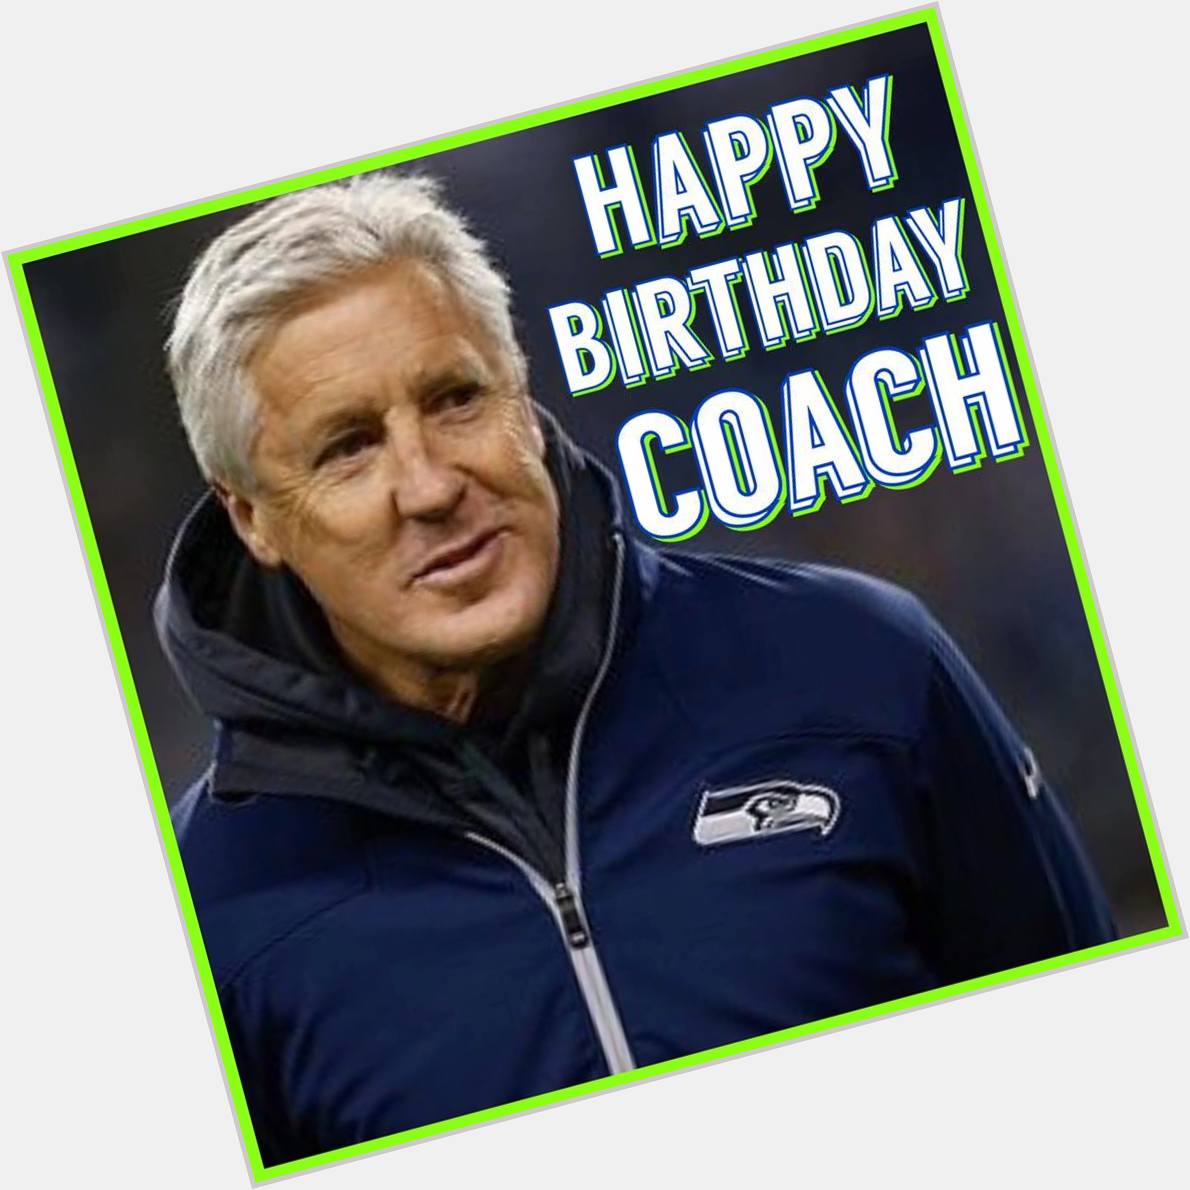 Happy Birthday Coach Pete Carroll!  